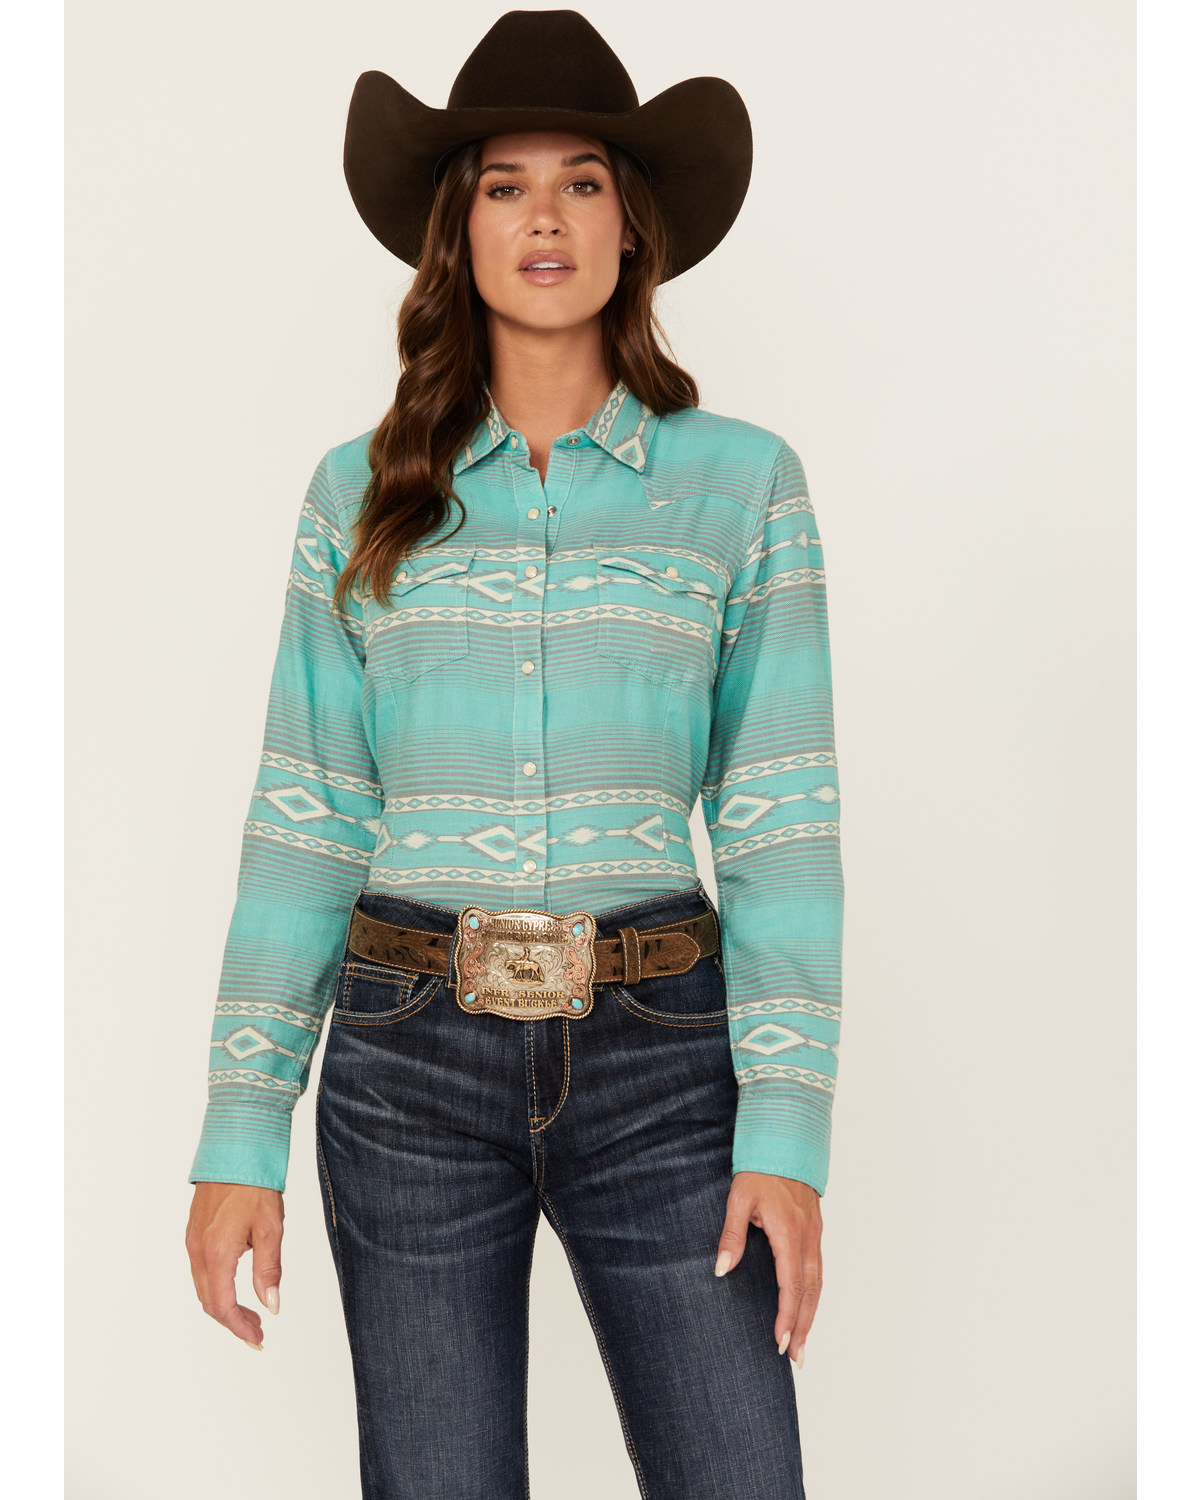 Ariat Women's R.E.A.L Jadeite Jacquard Southwestern Print Long Sleeve Snap Western Shirt